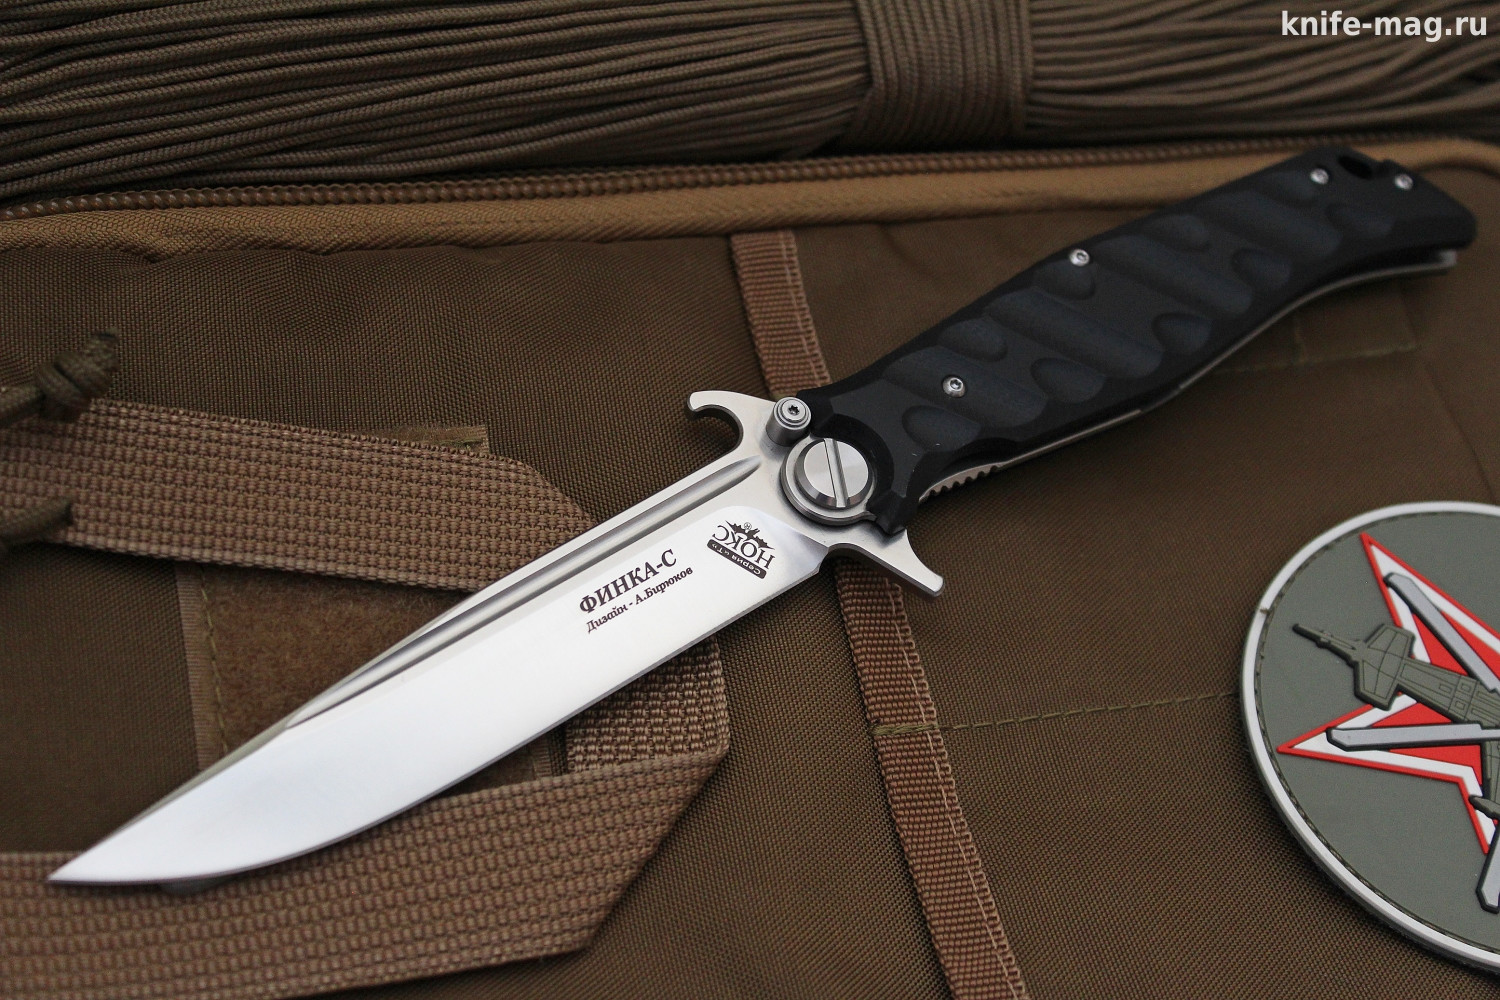  нож Складной нож Финка С (на подшипниках) | KNIFE-MAG.RU